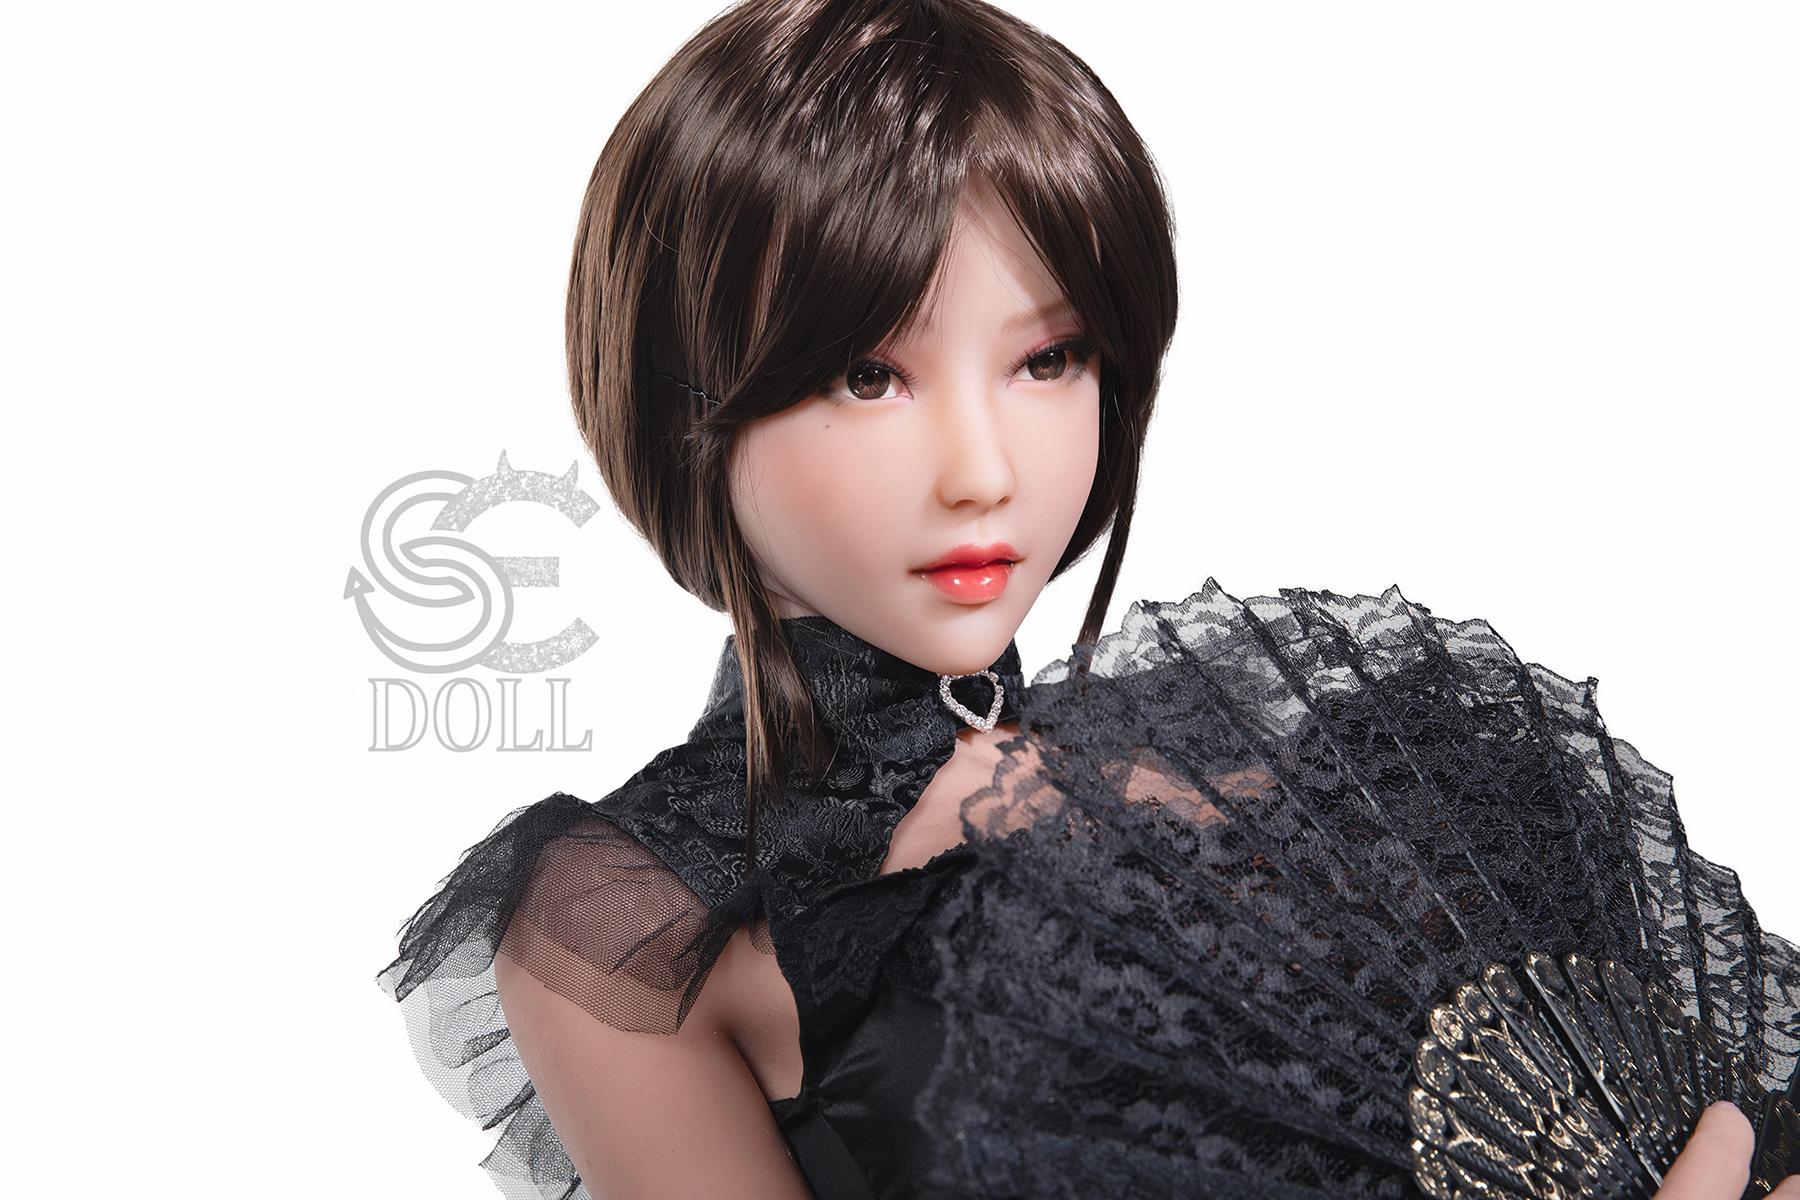 Masami Love Doll Cosplay Japanese Look